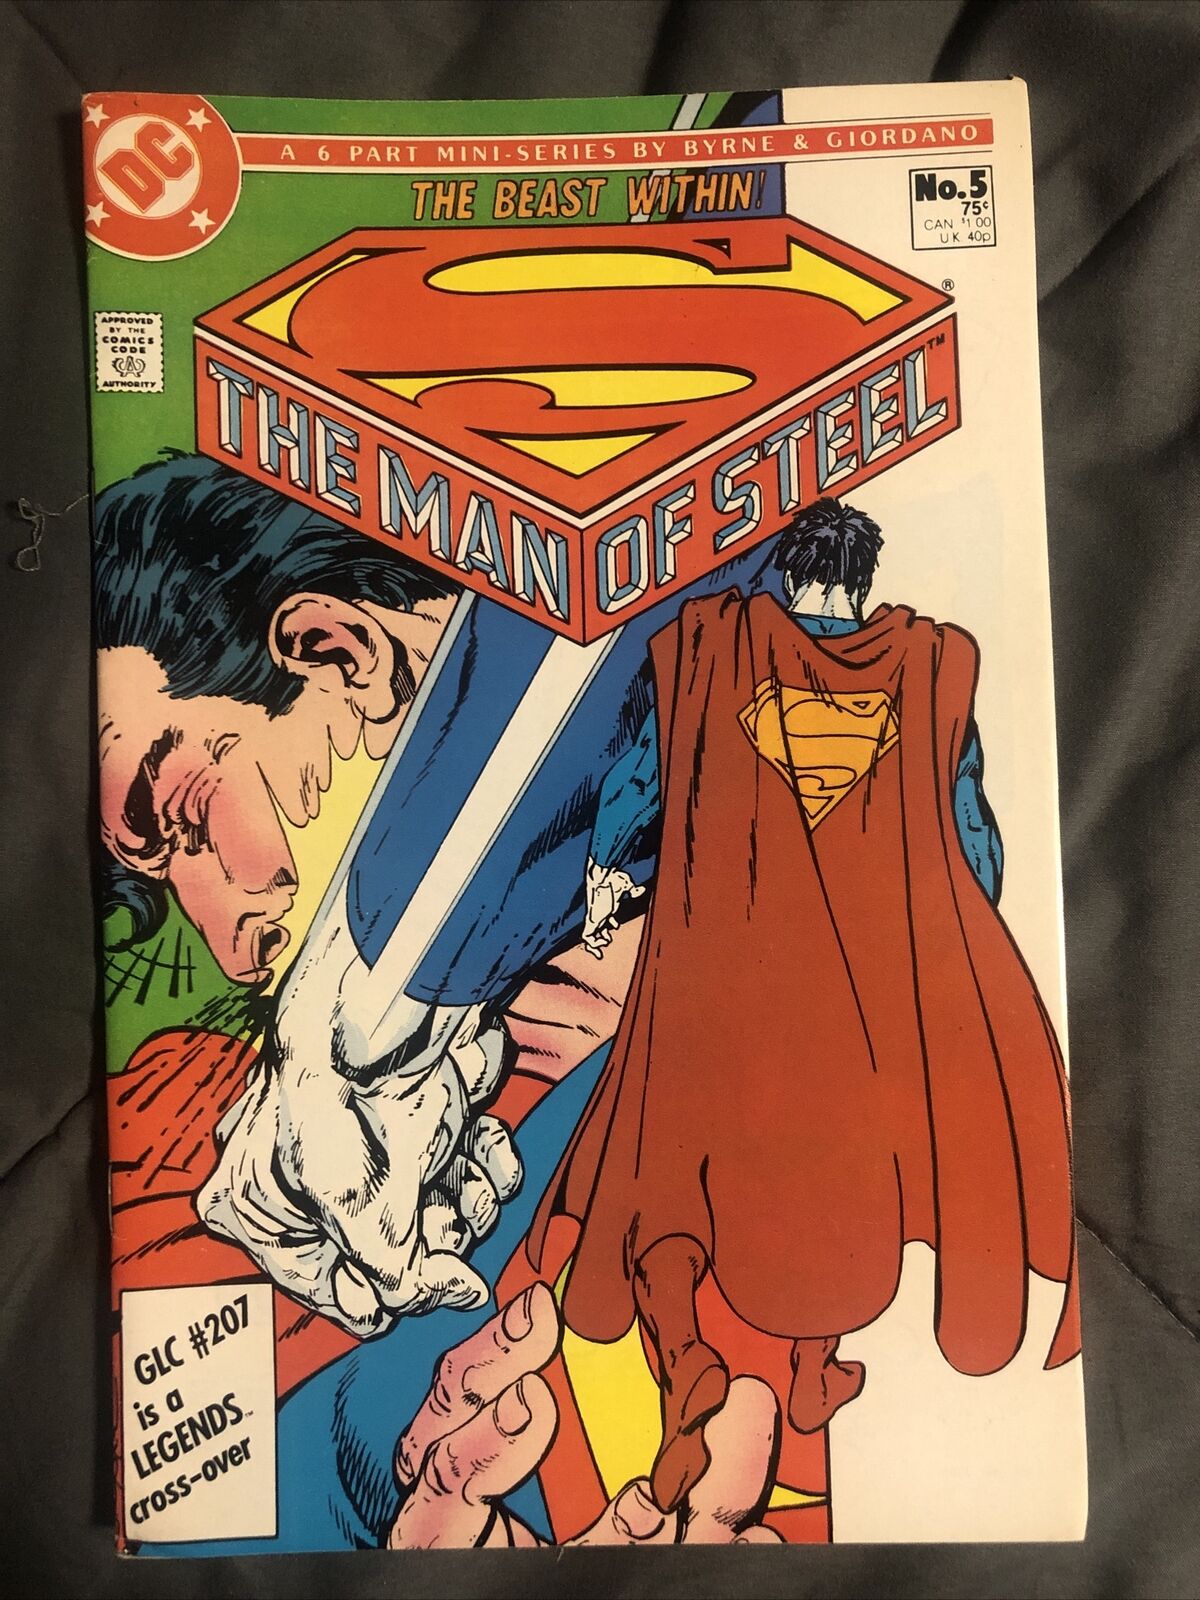 Superman - The Man Of Steel #5 of 6 part mini series(1986)